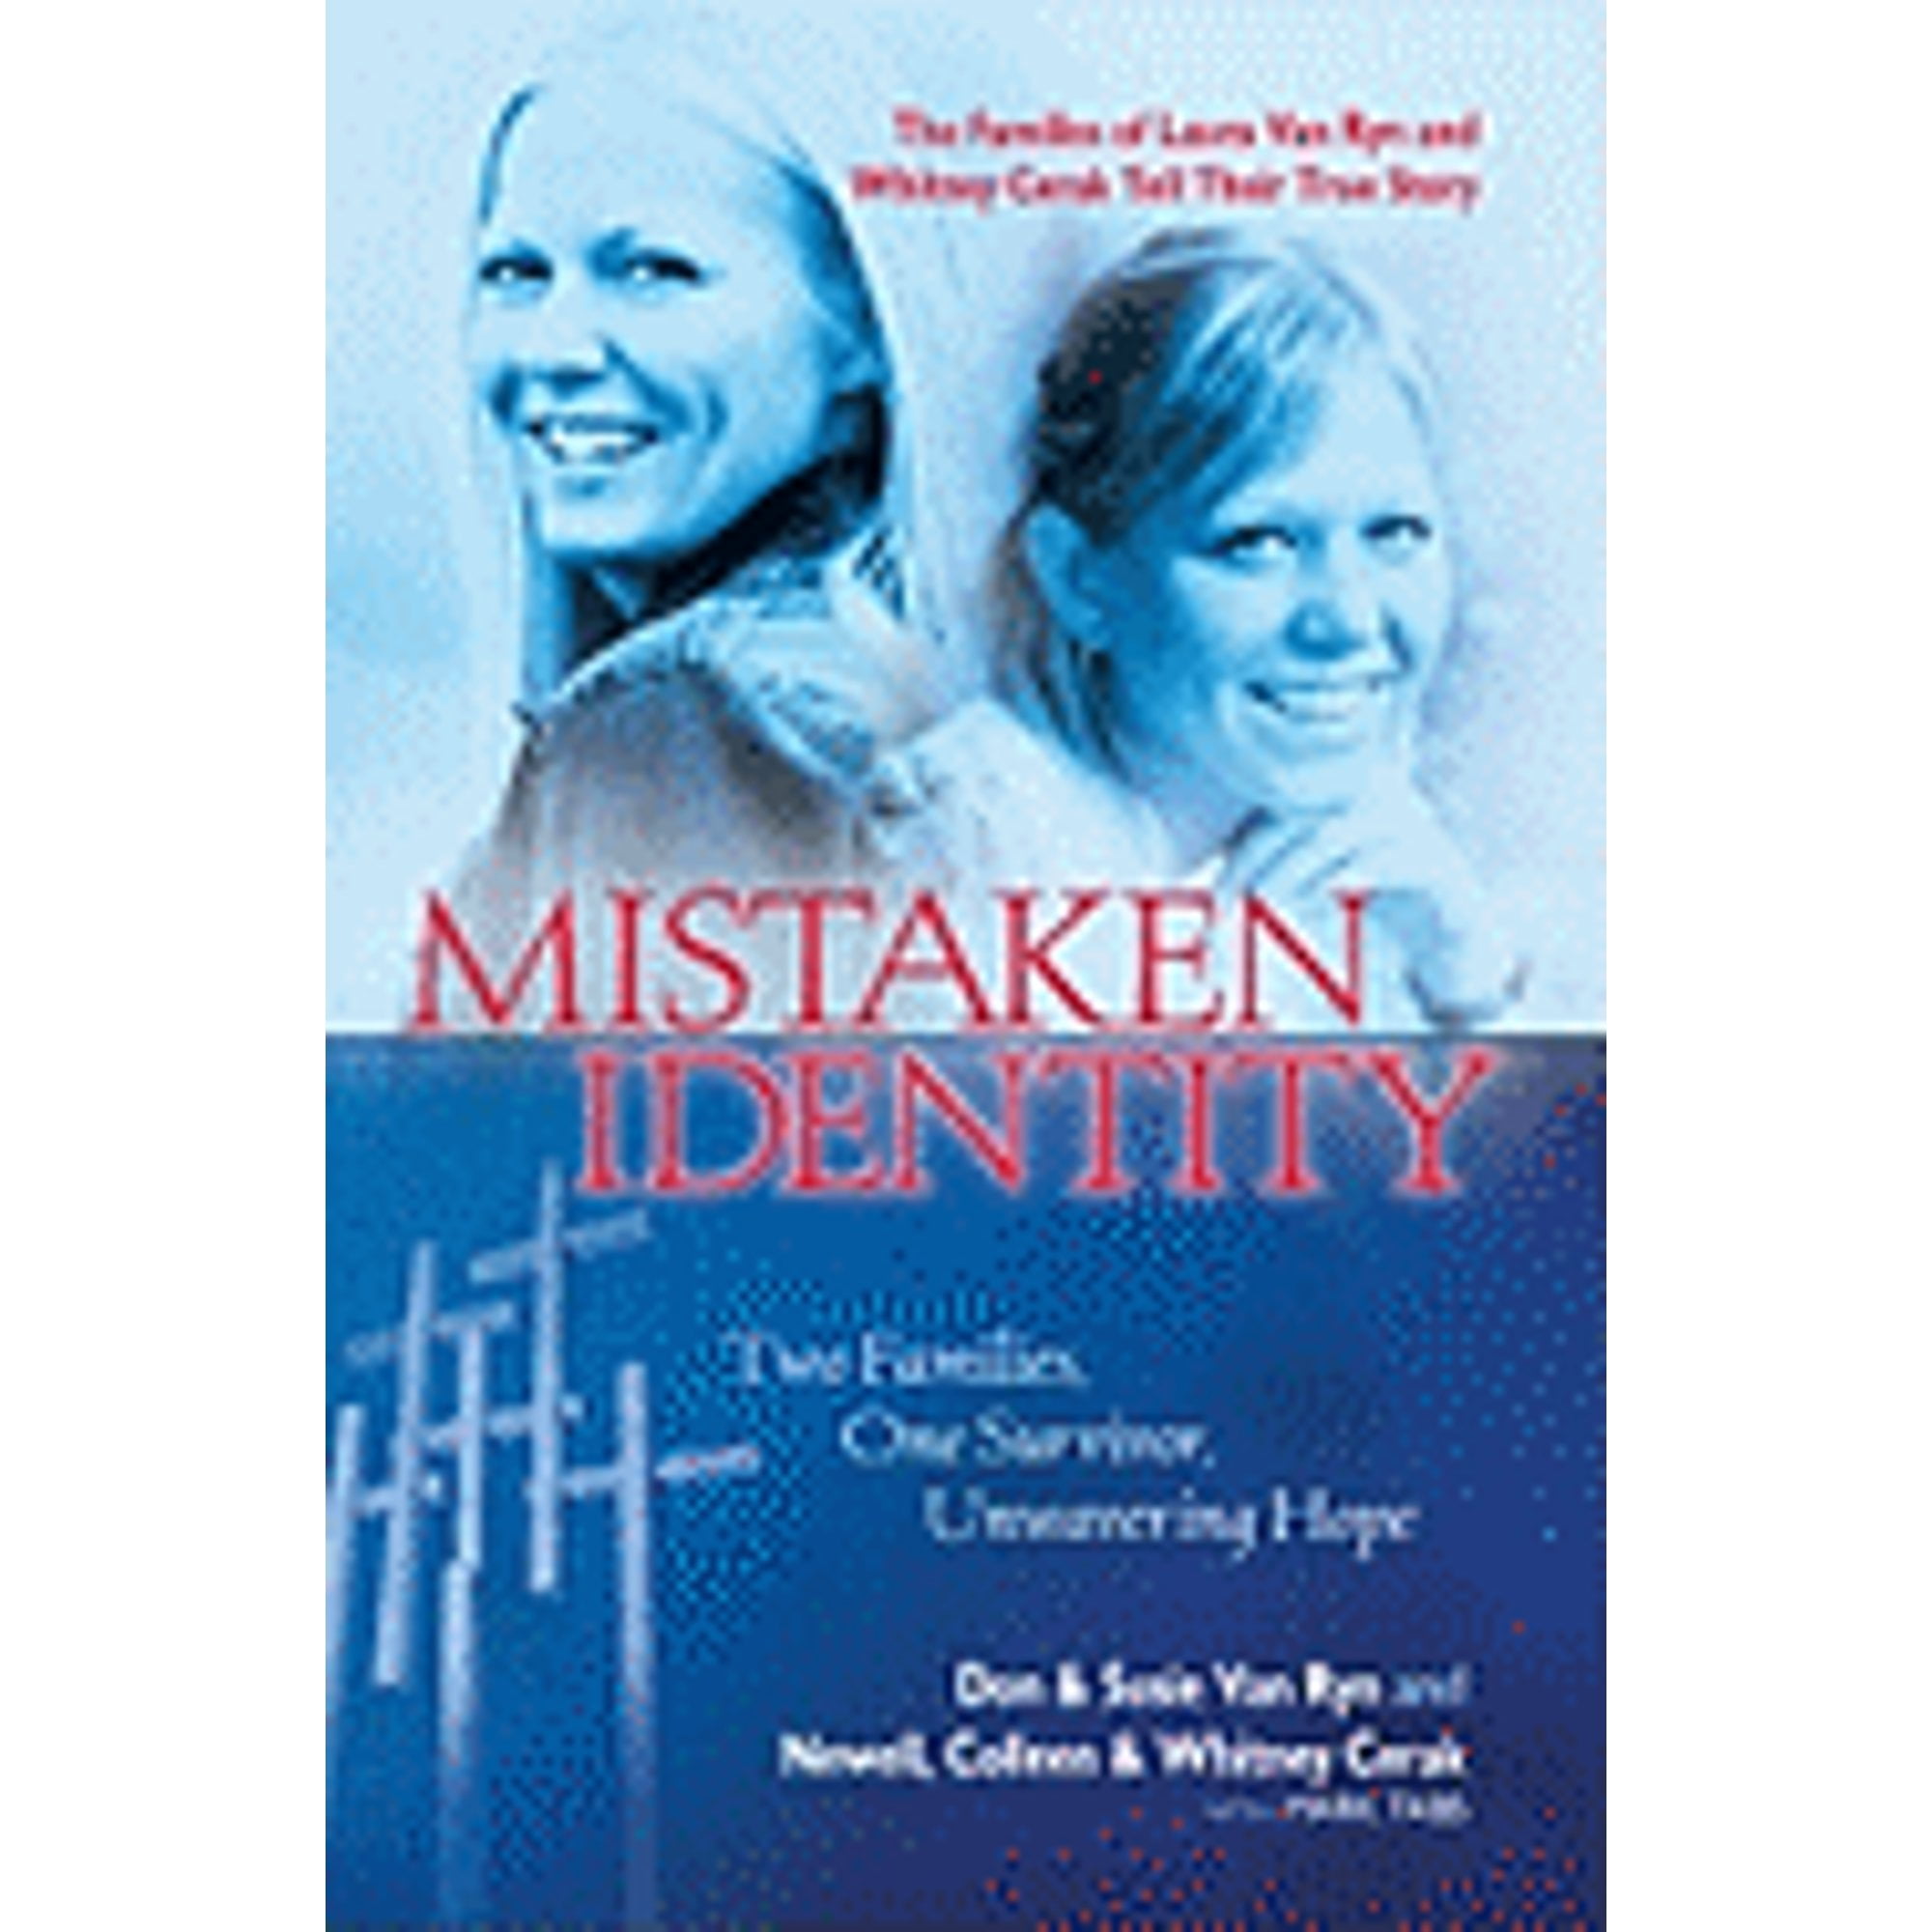 Pre-Owned Mistaken Identity: Two Families, One Survivor, Unwavering Hope Hardcover Don Susie Van Ryn, Newell Colleen Whitney Cerak